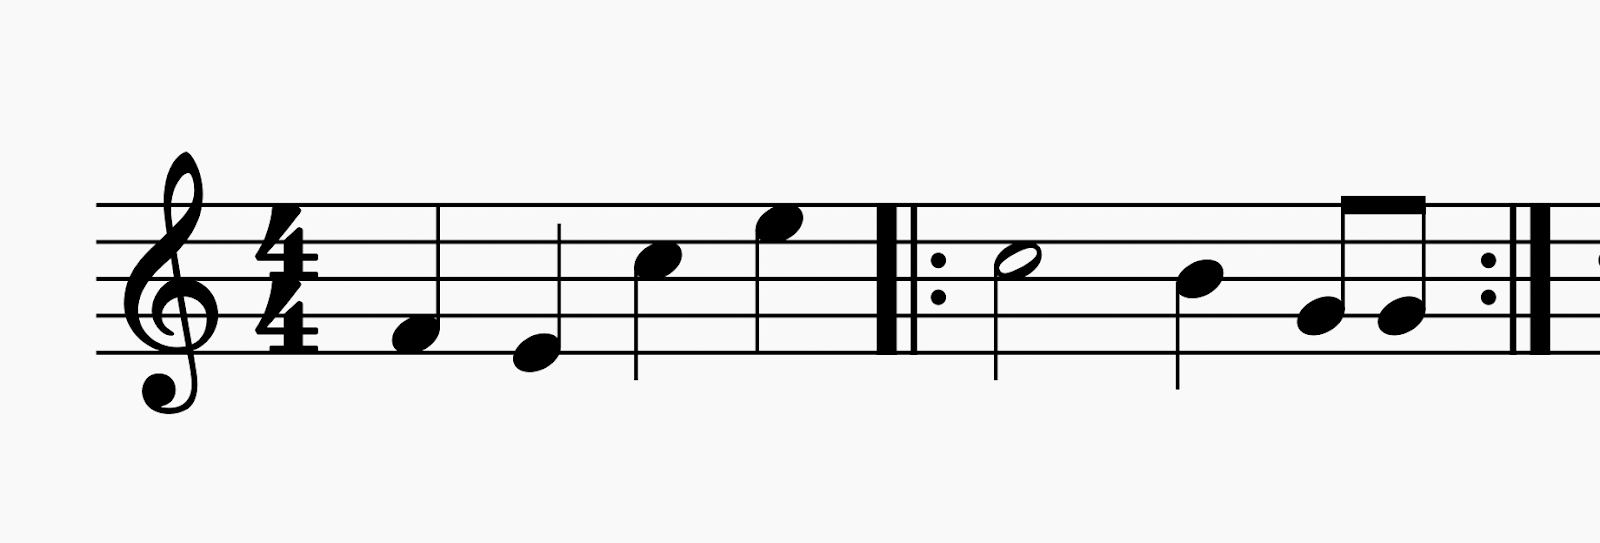 Music notation explanation